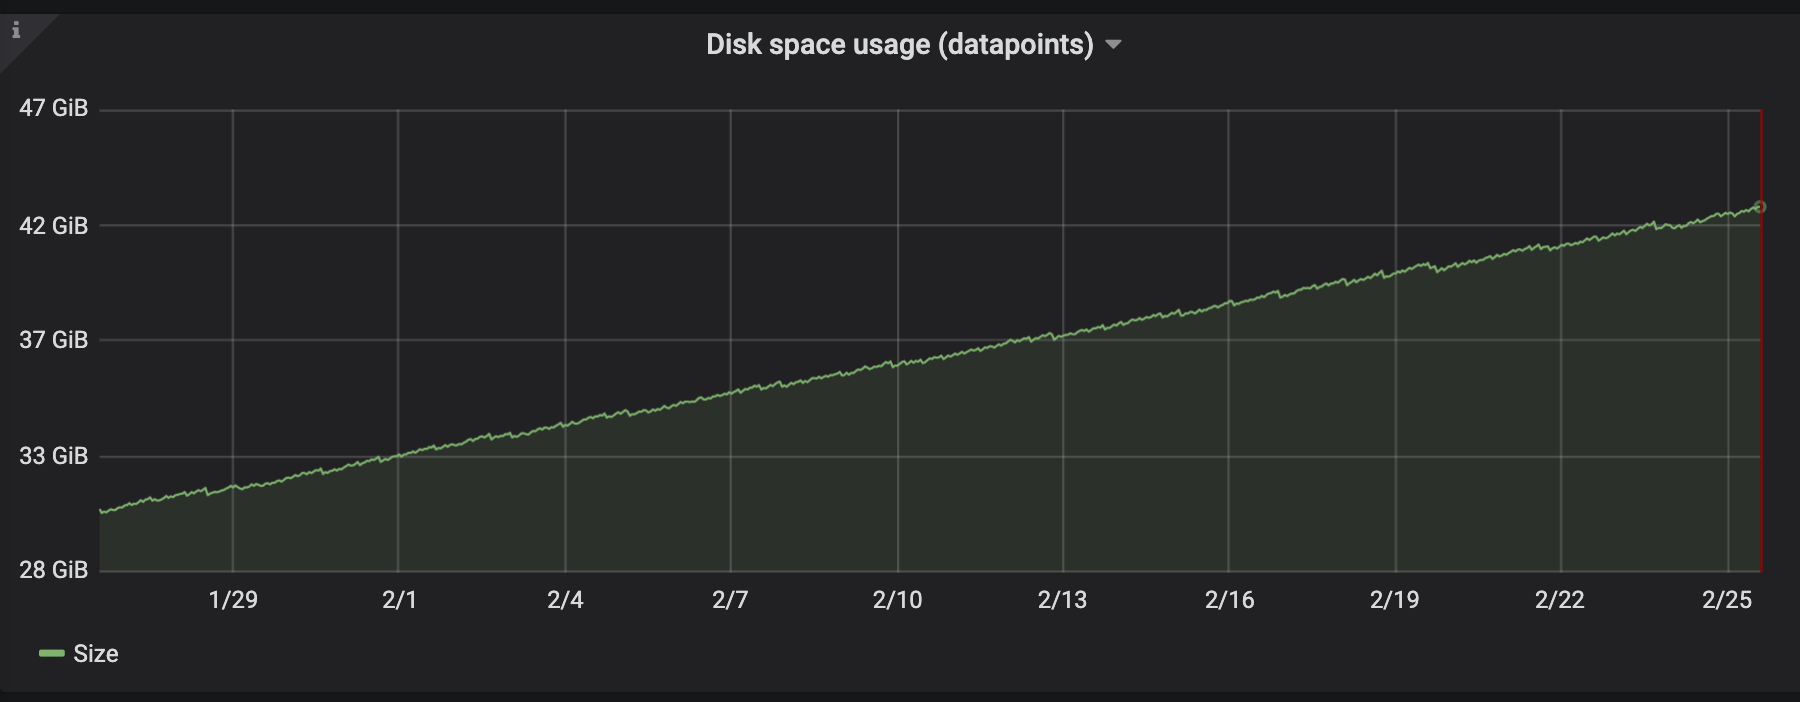 VictoriaMetrics disk usage